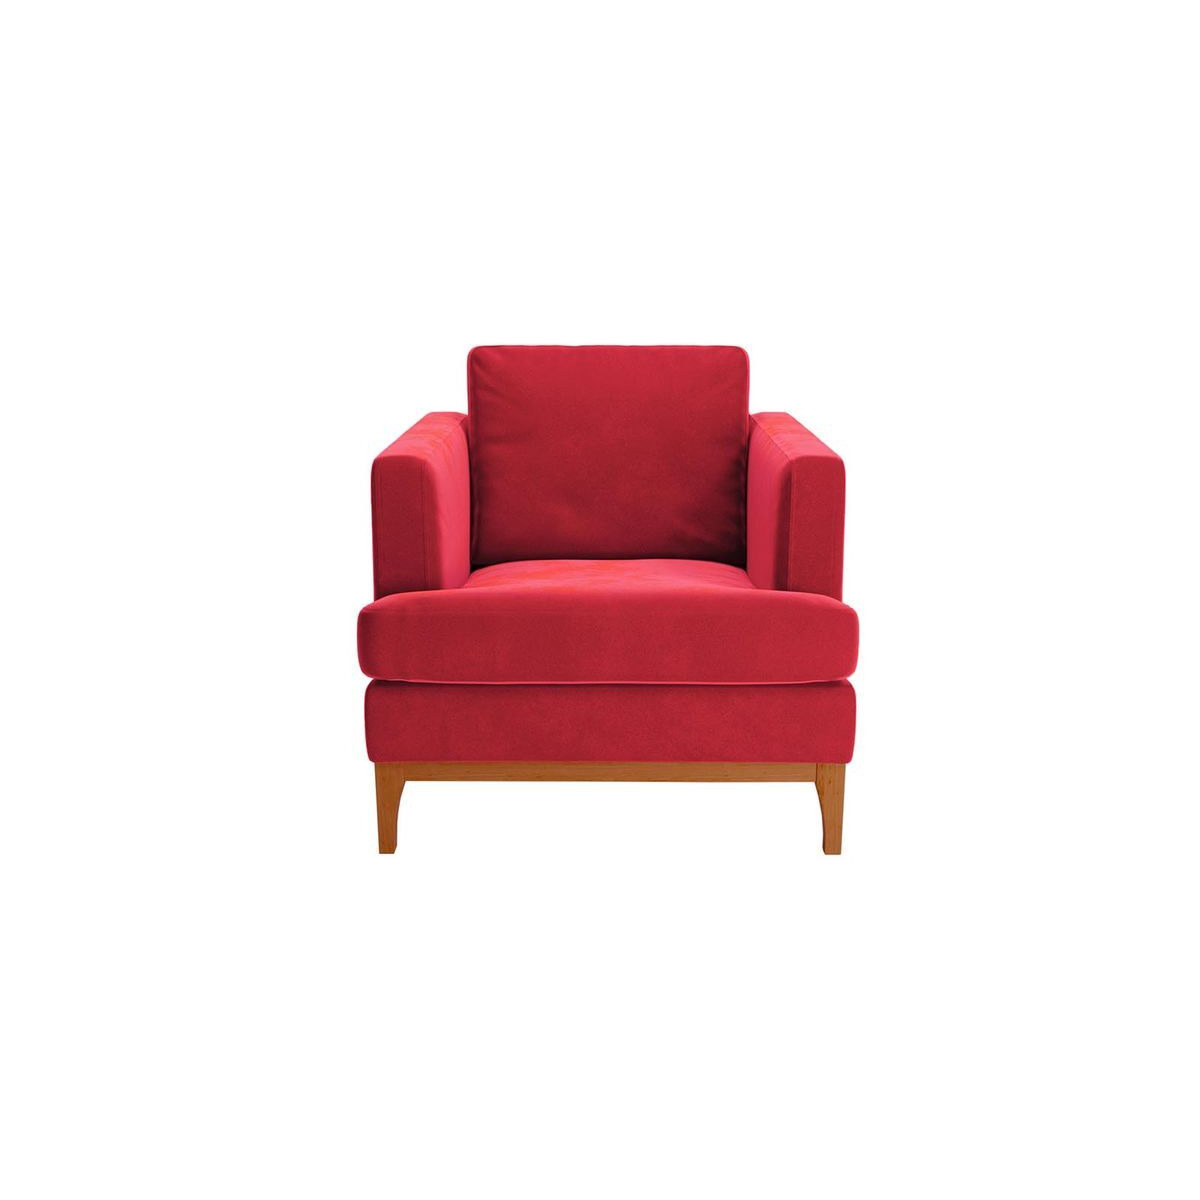 Scarlett Armchair, dark red, Leg colour: aveo - image 1